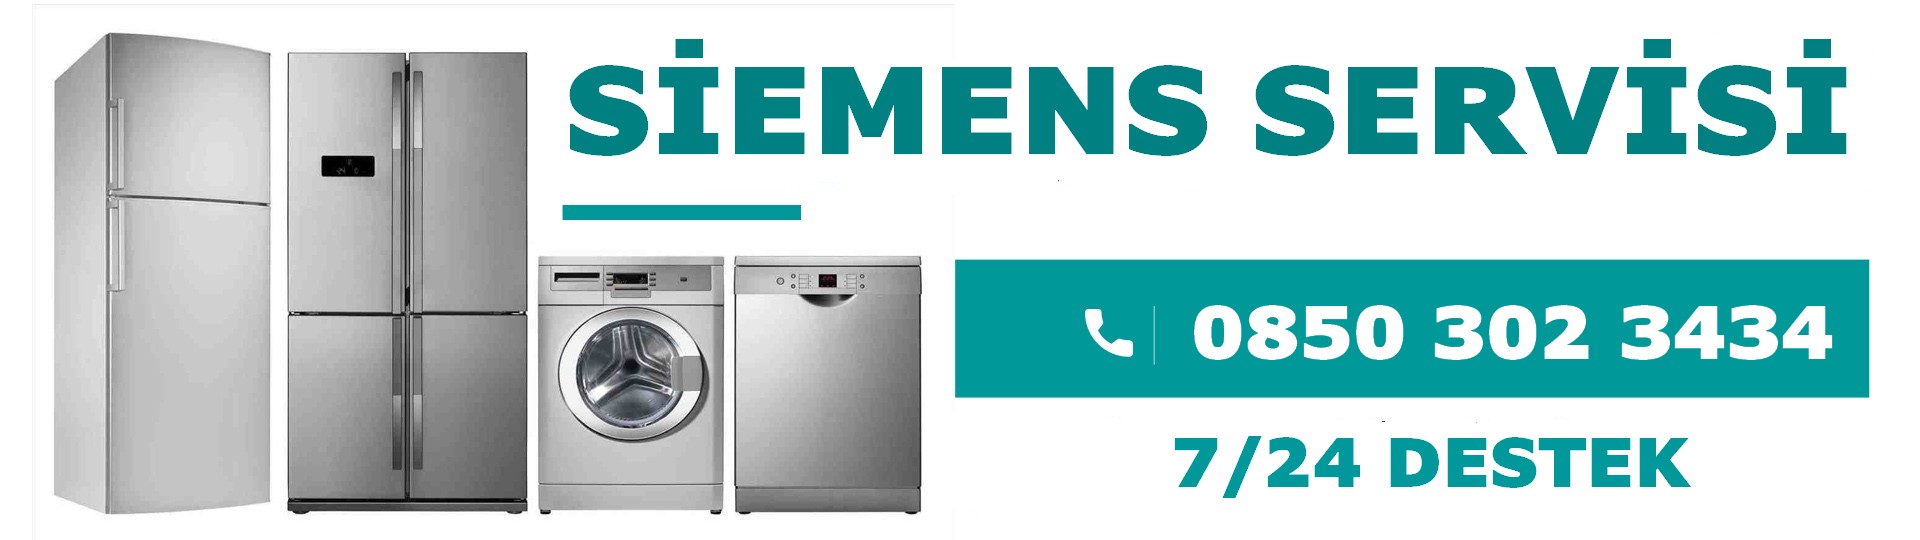 Selendi Siemens Servisi